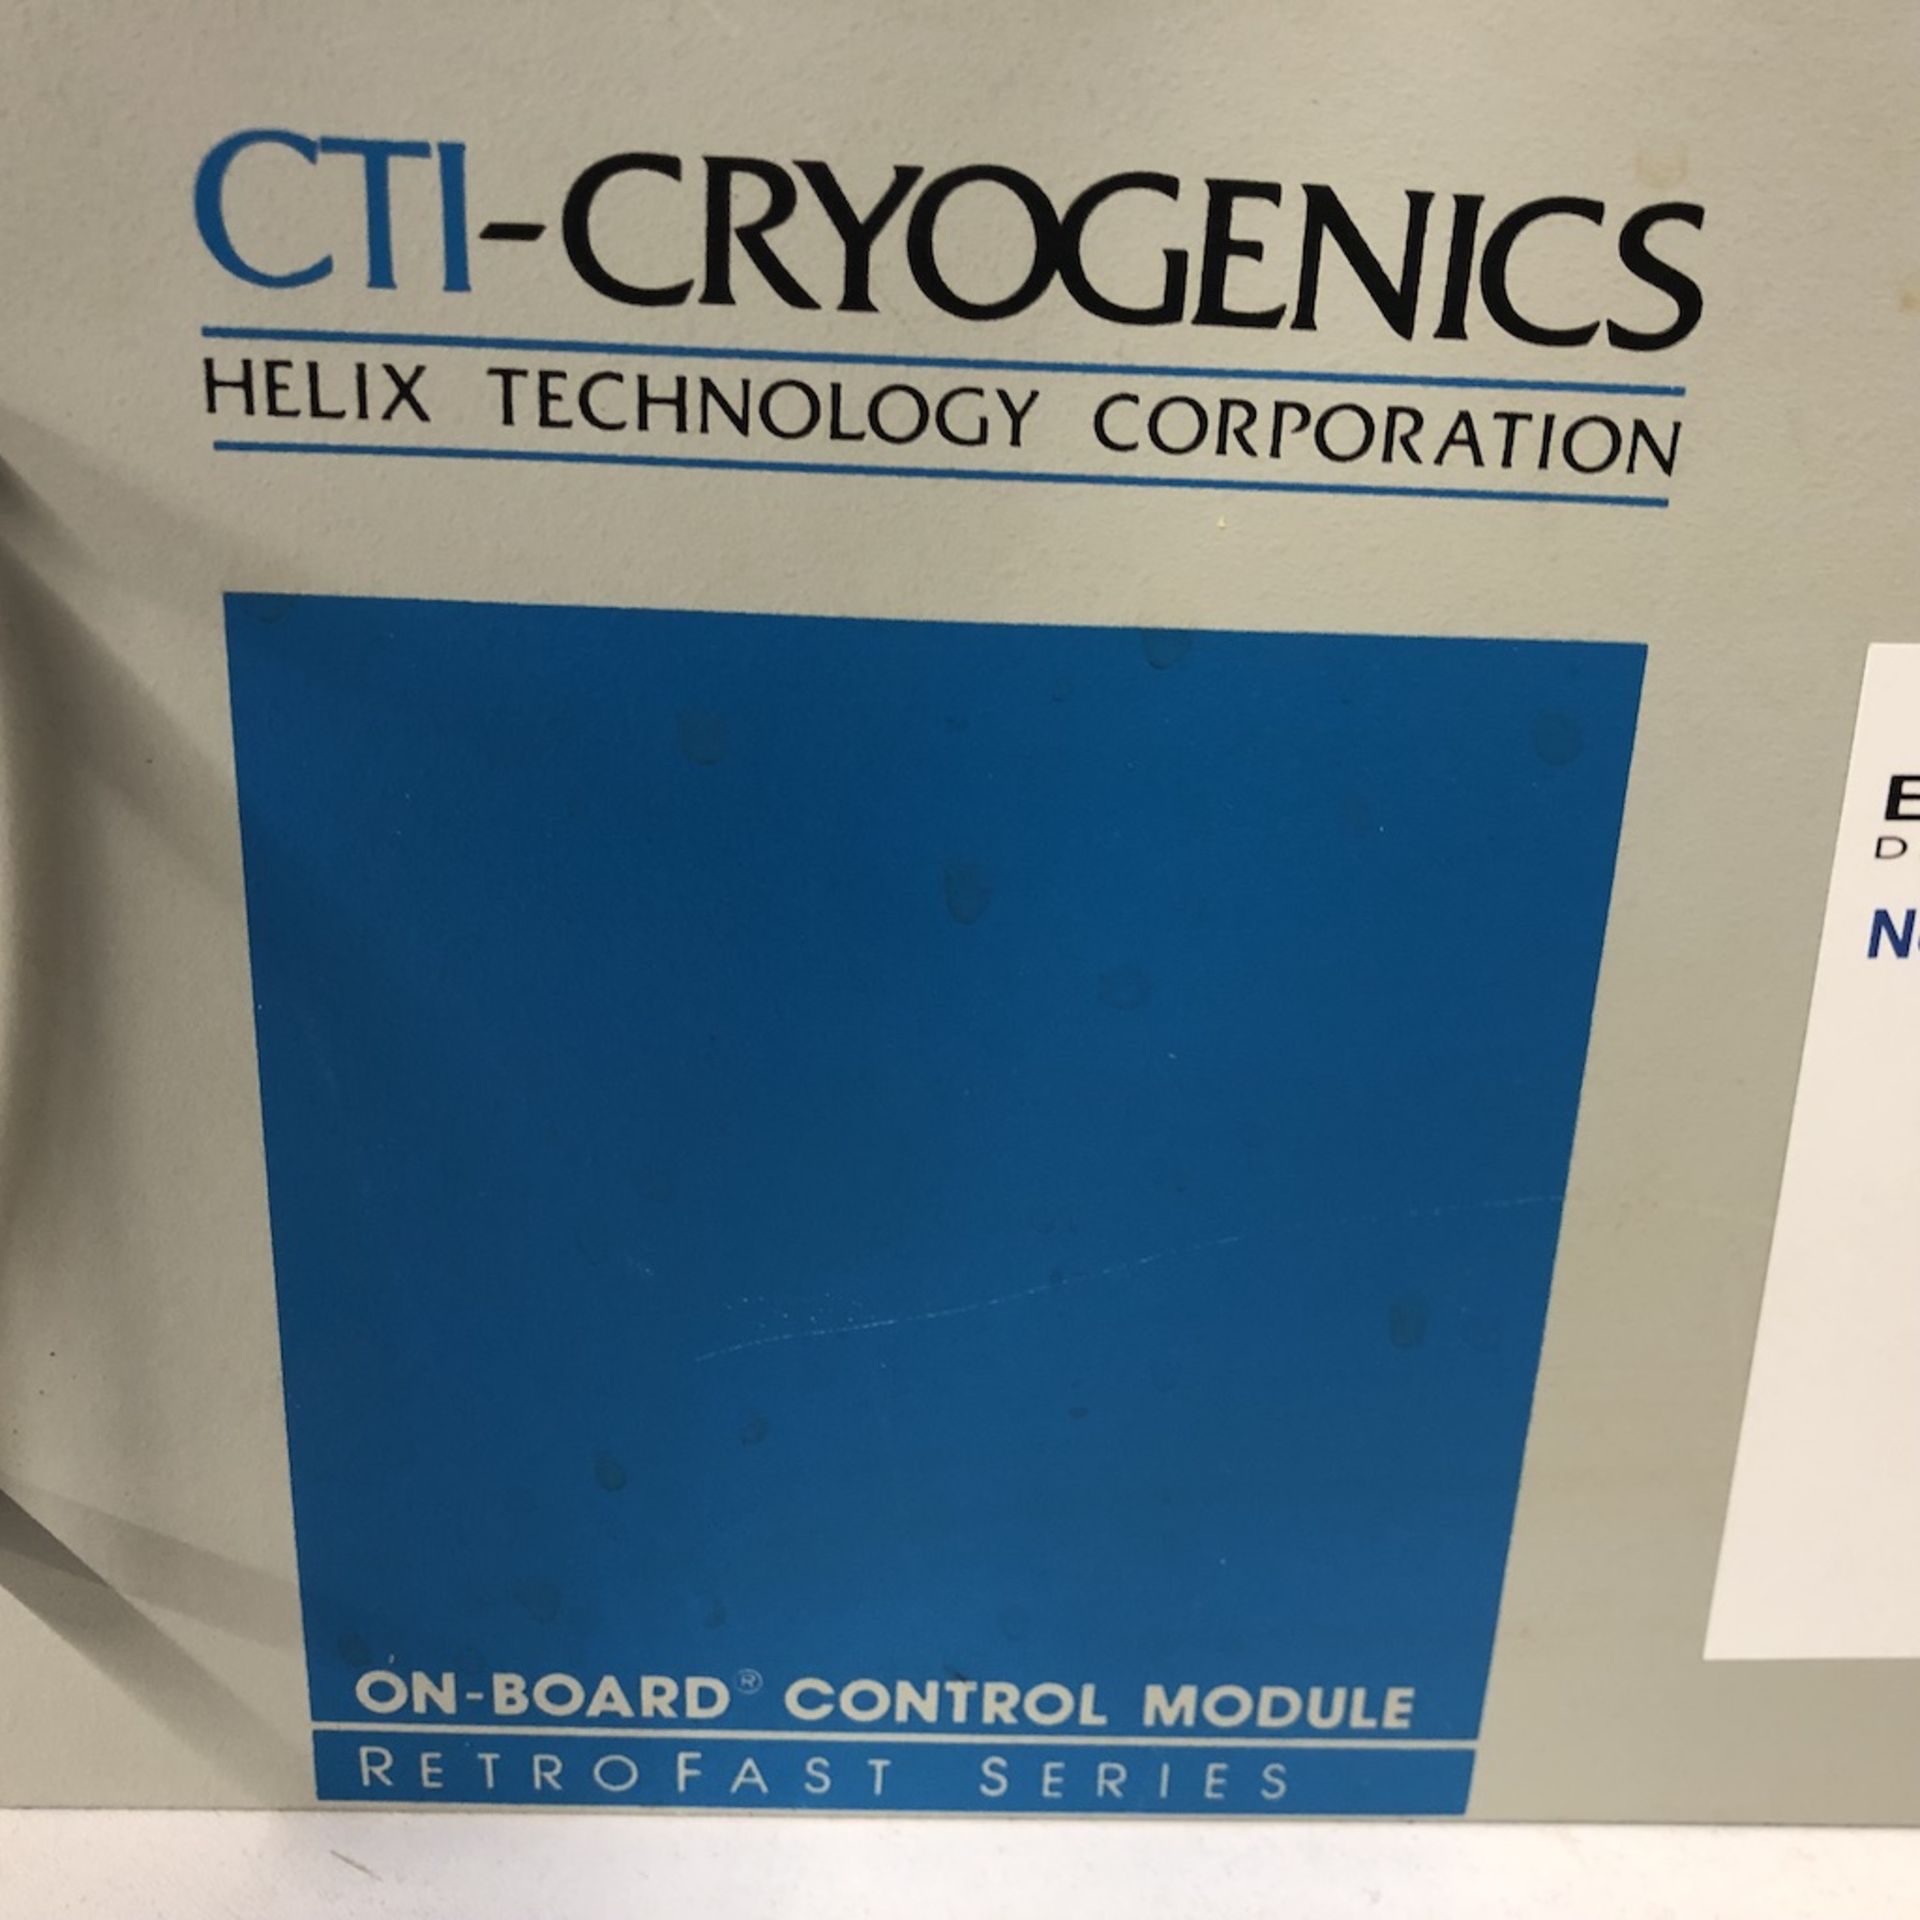 CTI-CRYOGENICS HELIX TECHNOLOGY CORPORATION RETRO FAST SERIES ON-BOARD CONTROL MODULE - Image 2 of 14